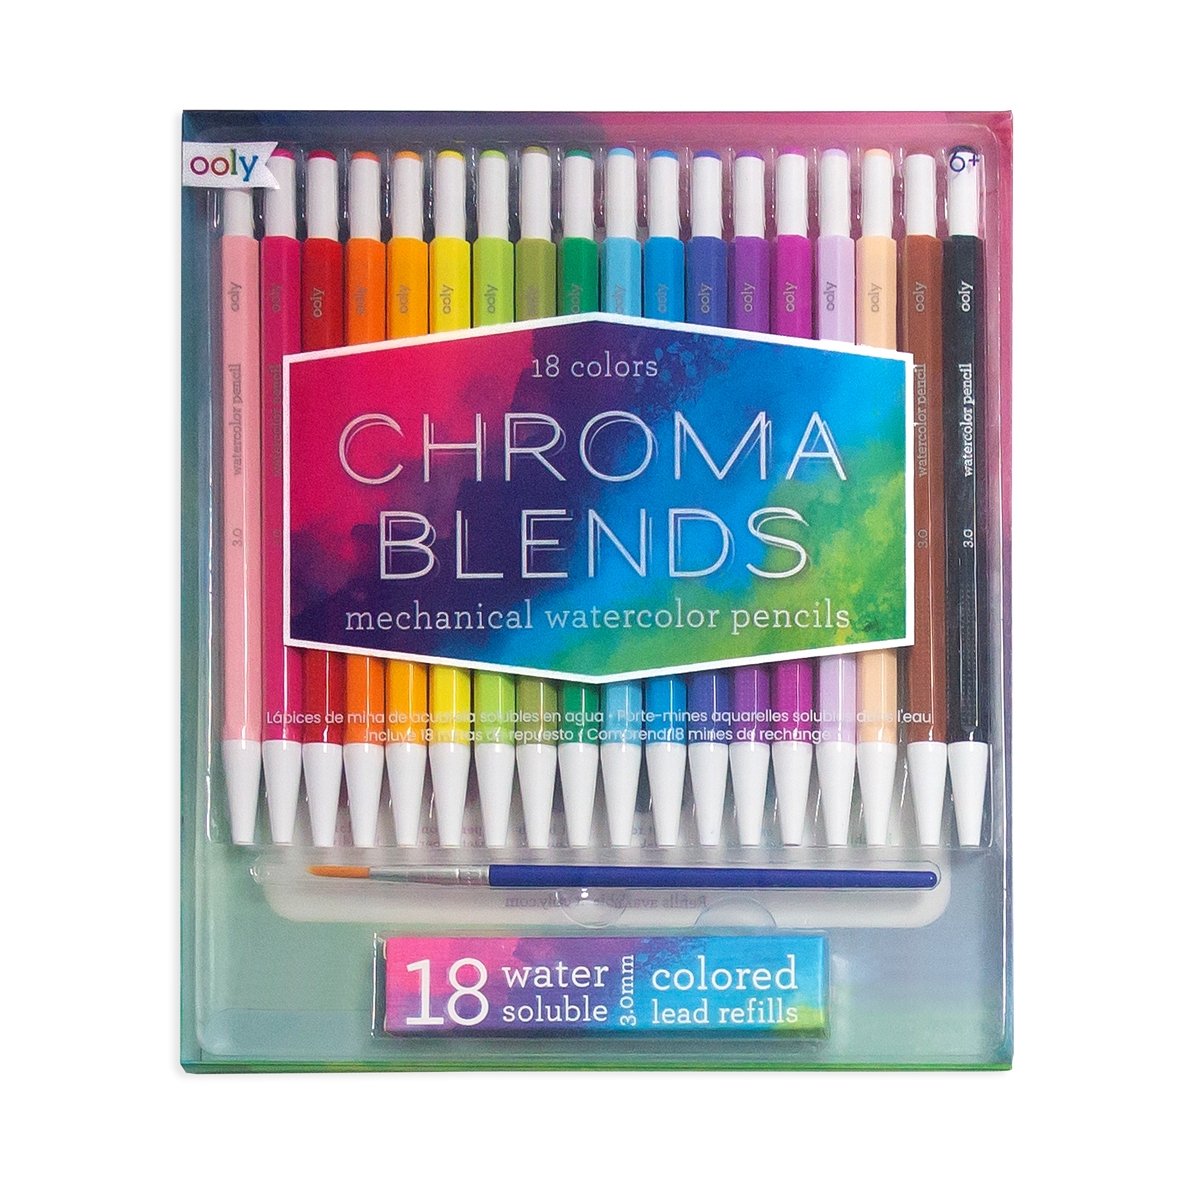 Chroma Blends Mechanical Watercolor Pencil